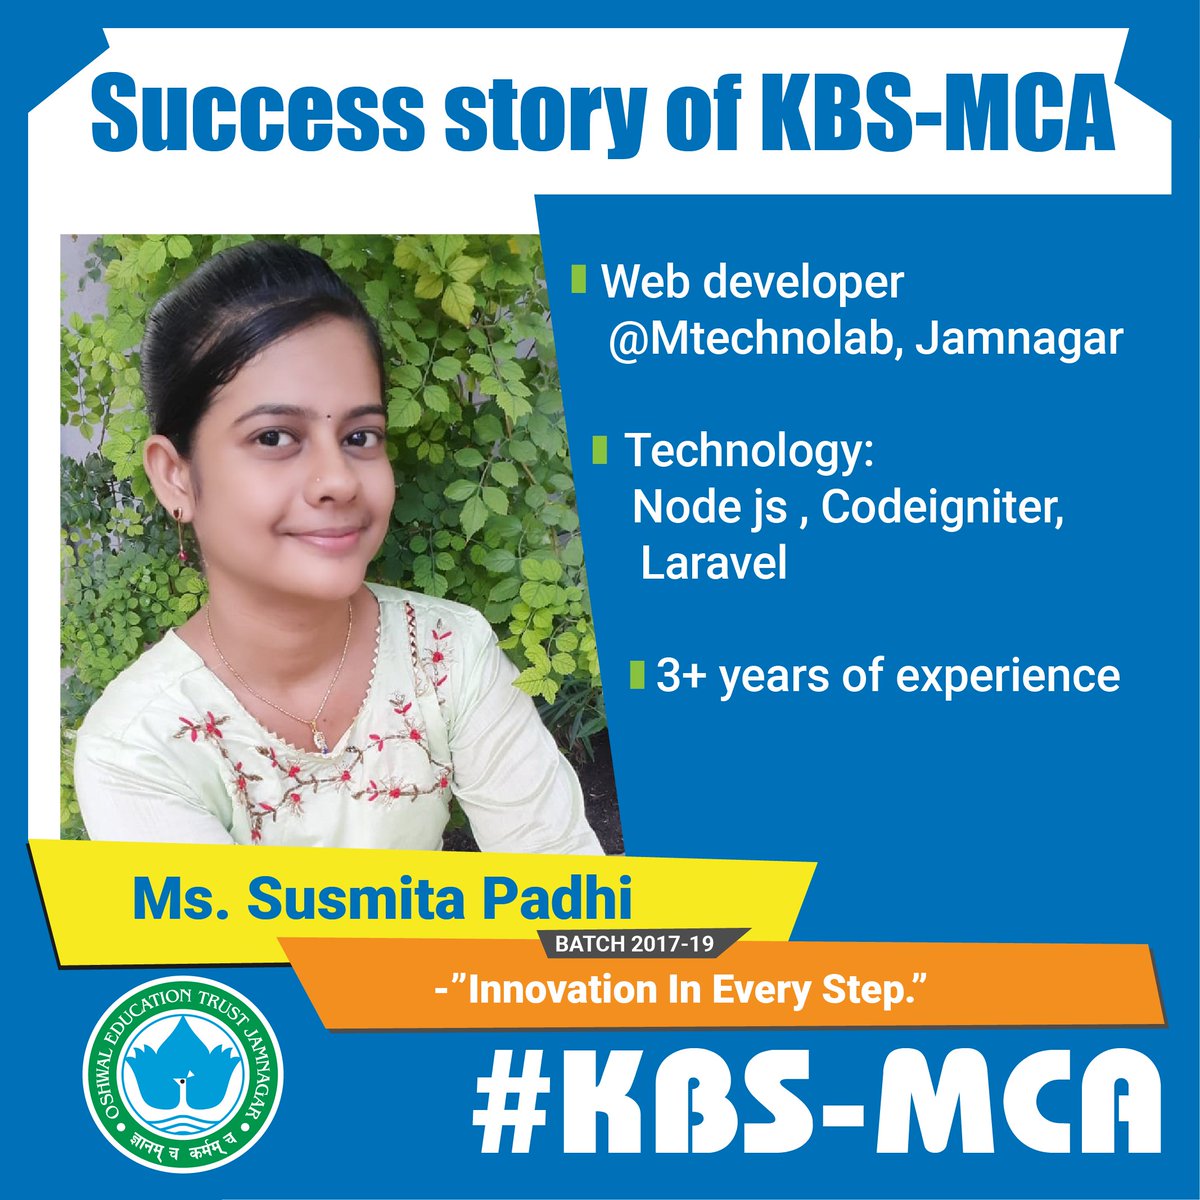 #Susmita_Padhi
#An_Alumnus_of_JVIMS
#Web_developer
#Jamnagar
#JVIMS_Memories
#JVIAMS
#MCA
#JVIMS_MCA_College
#MCA_in_Jamnagar